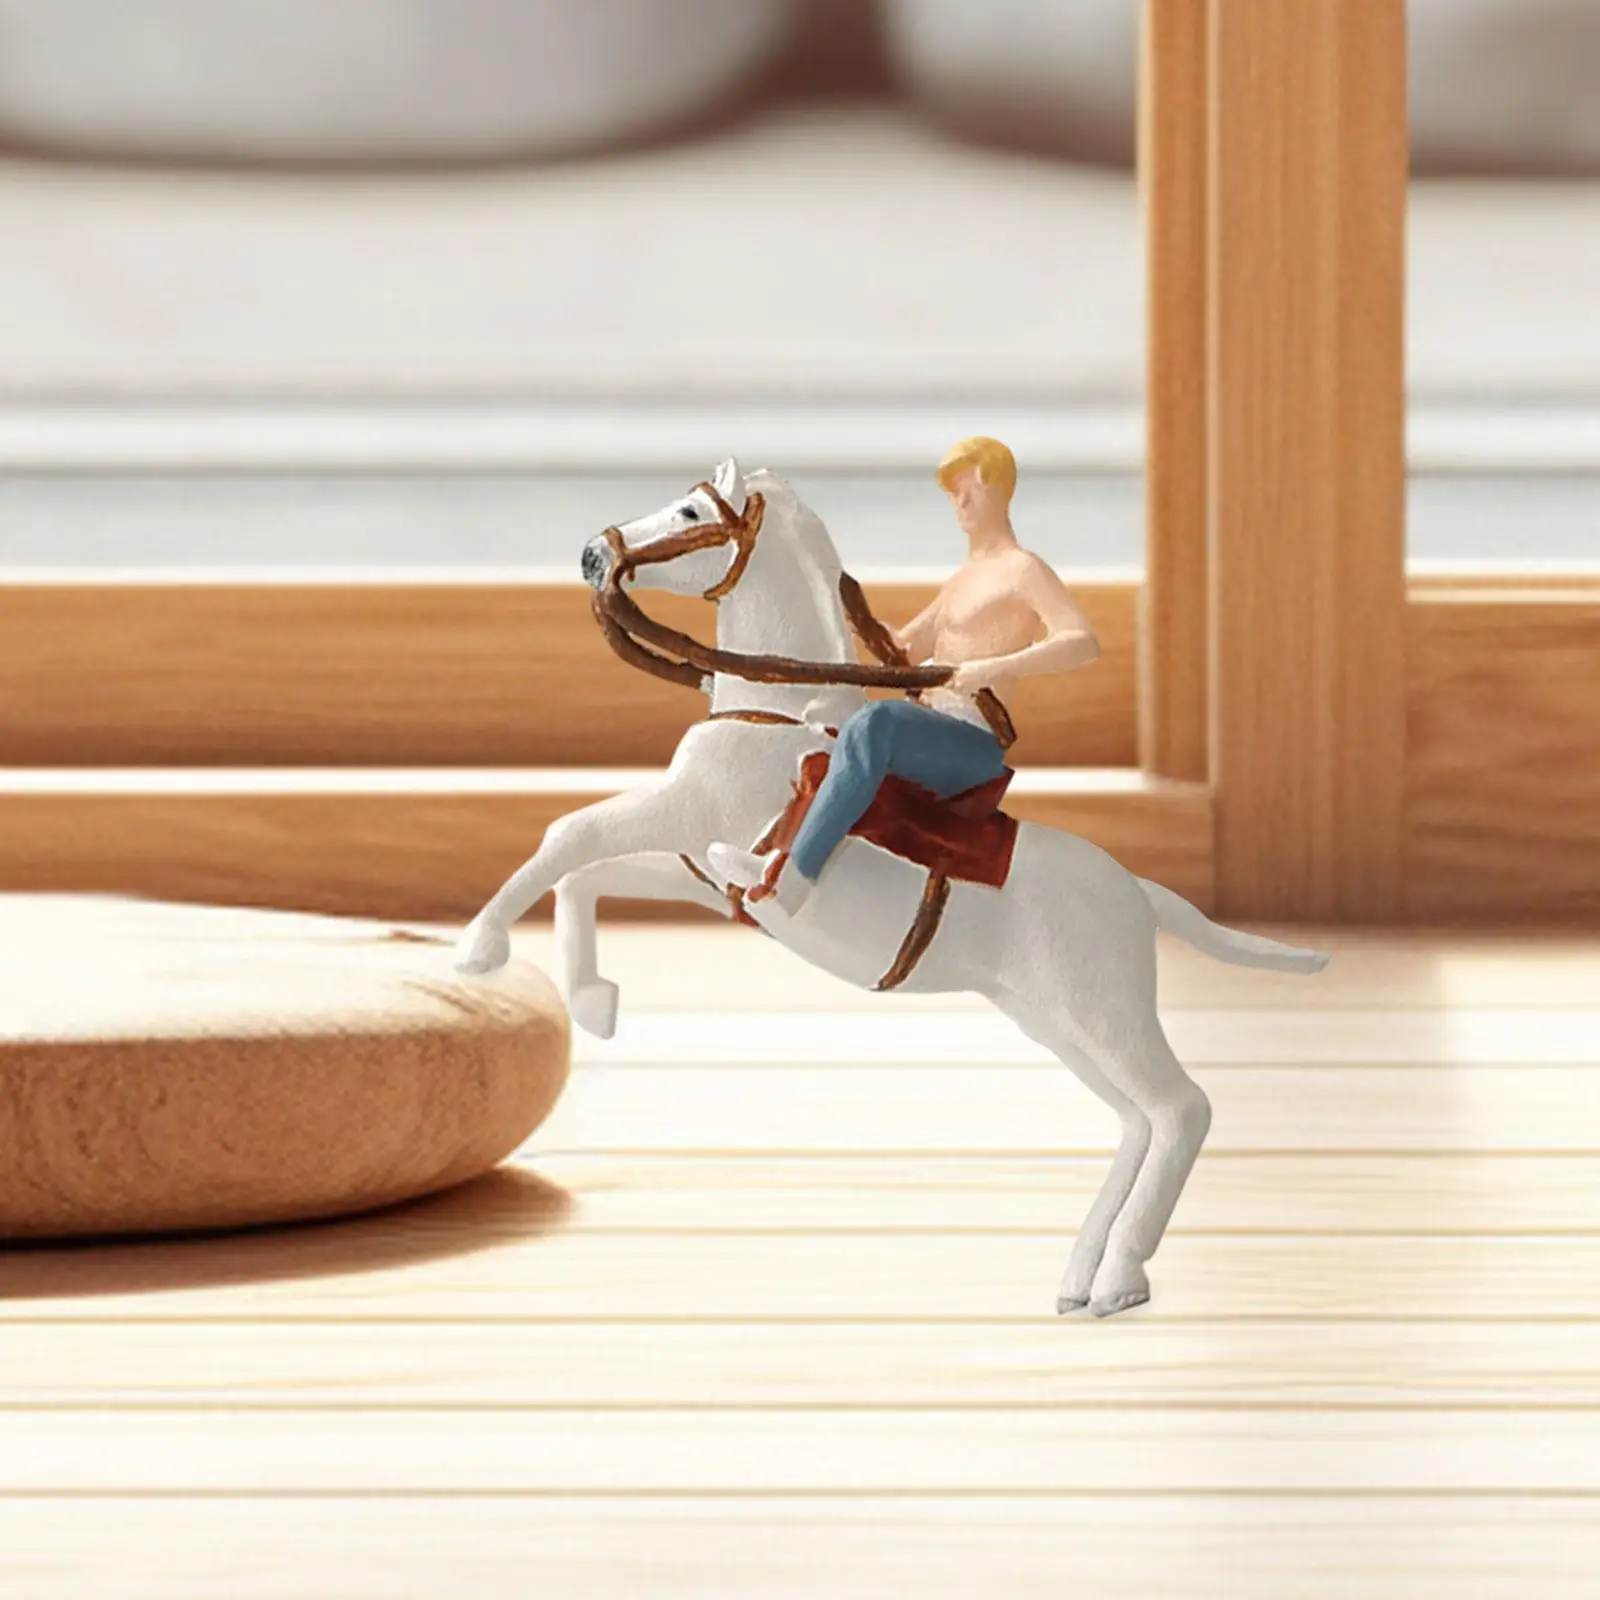 1:64 Scale Male on Horseback Diorama Scenery Figures Mini Miniature Resin Figurine for Layout Decoration DIY Scene Decor